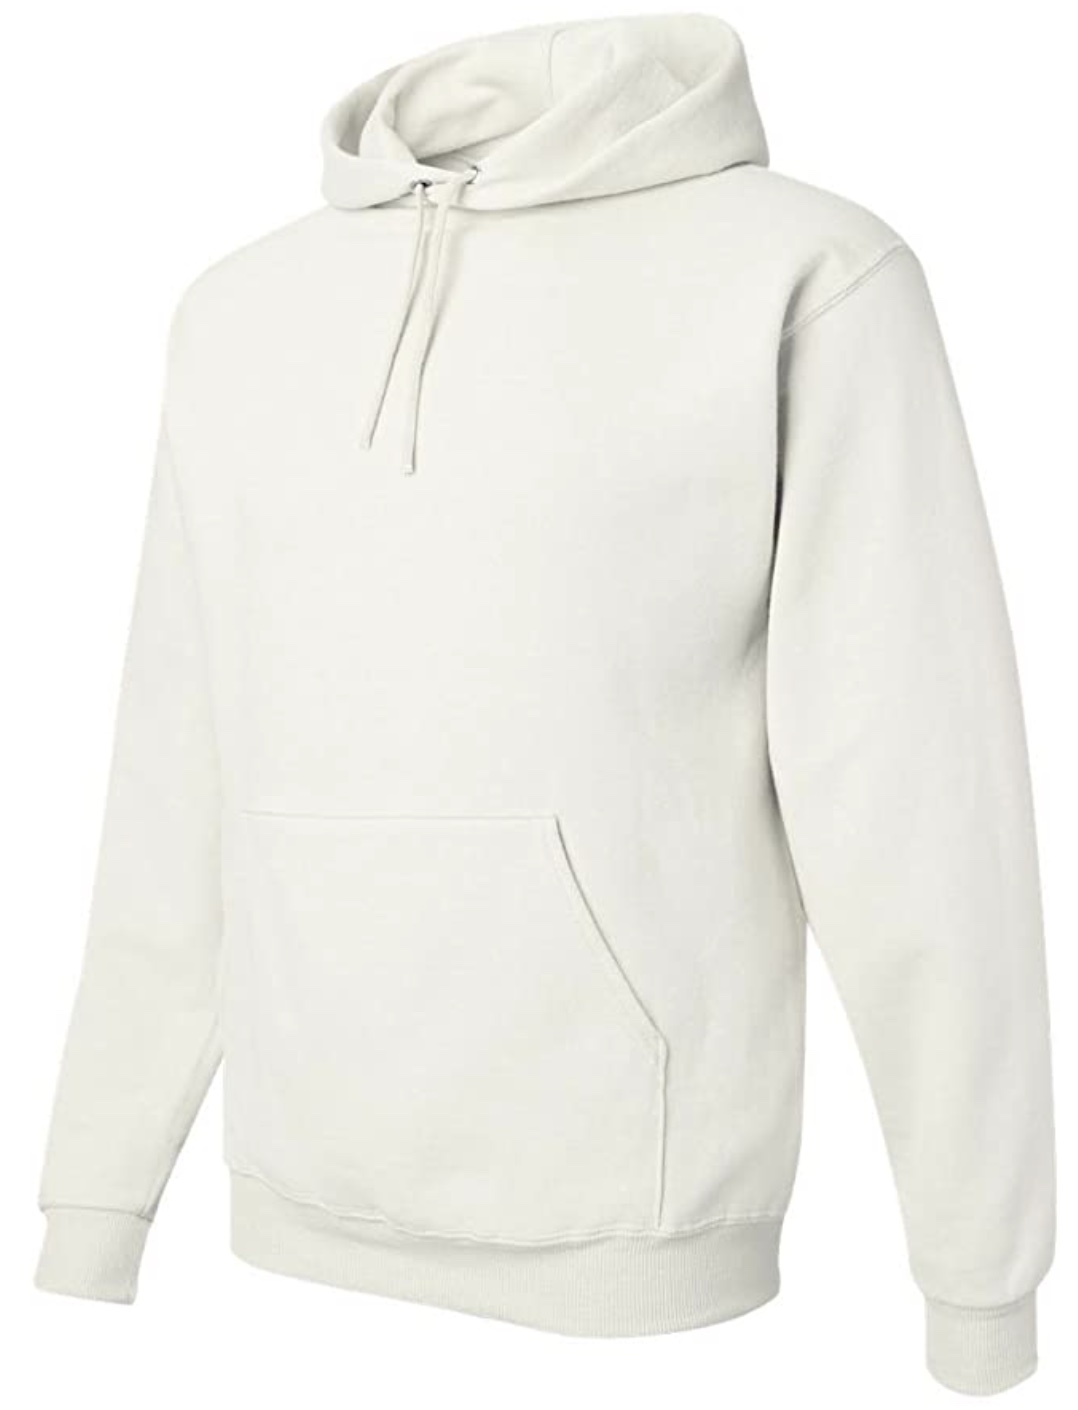 Amazon basics white hoodie.